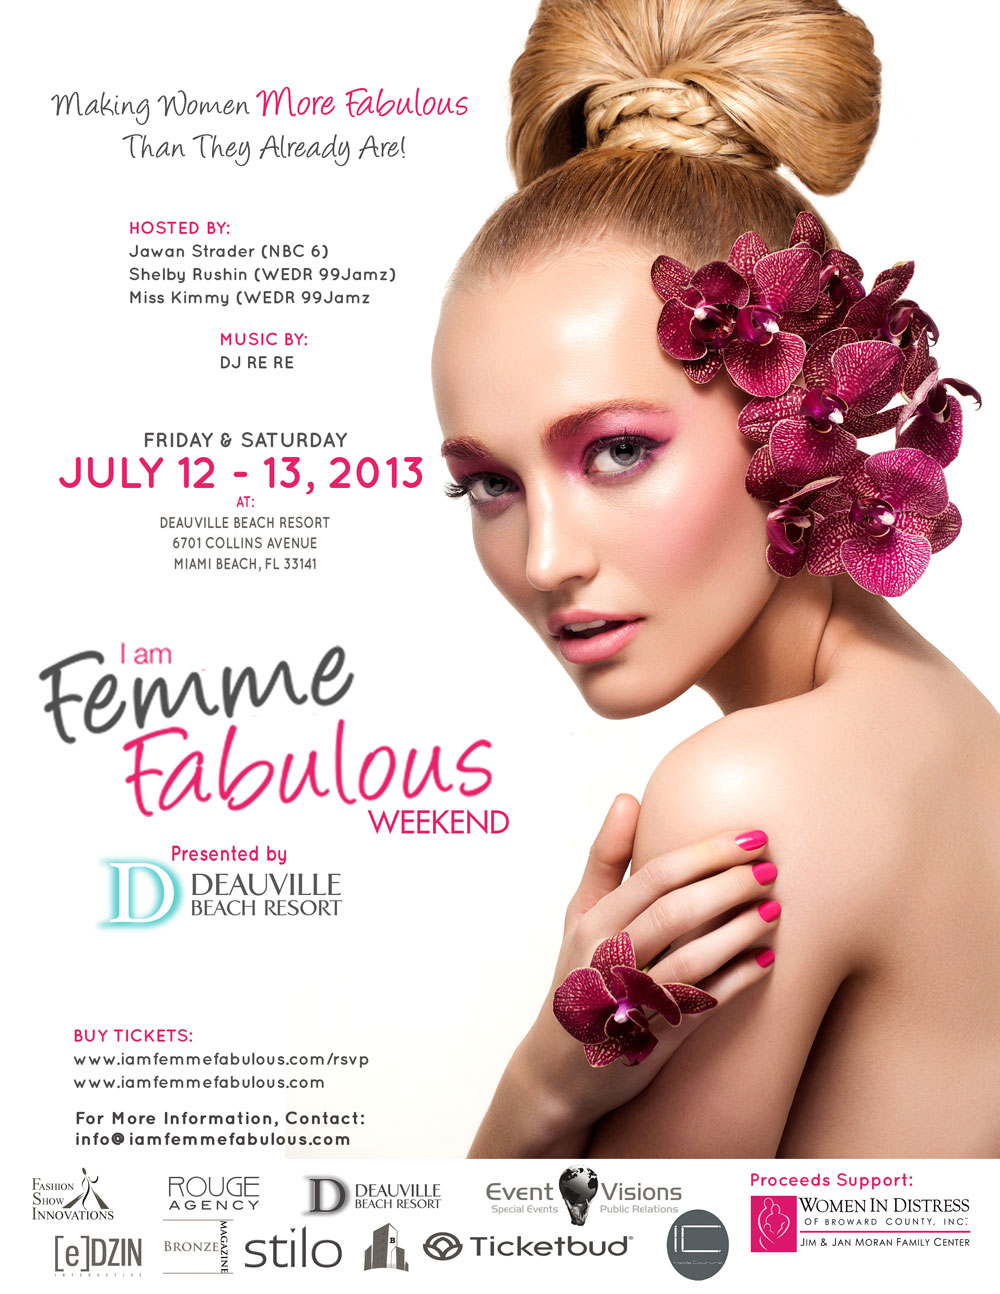 I am Femme Fabulous Weekend, Presented by Deauville Beach Resort, is ...